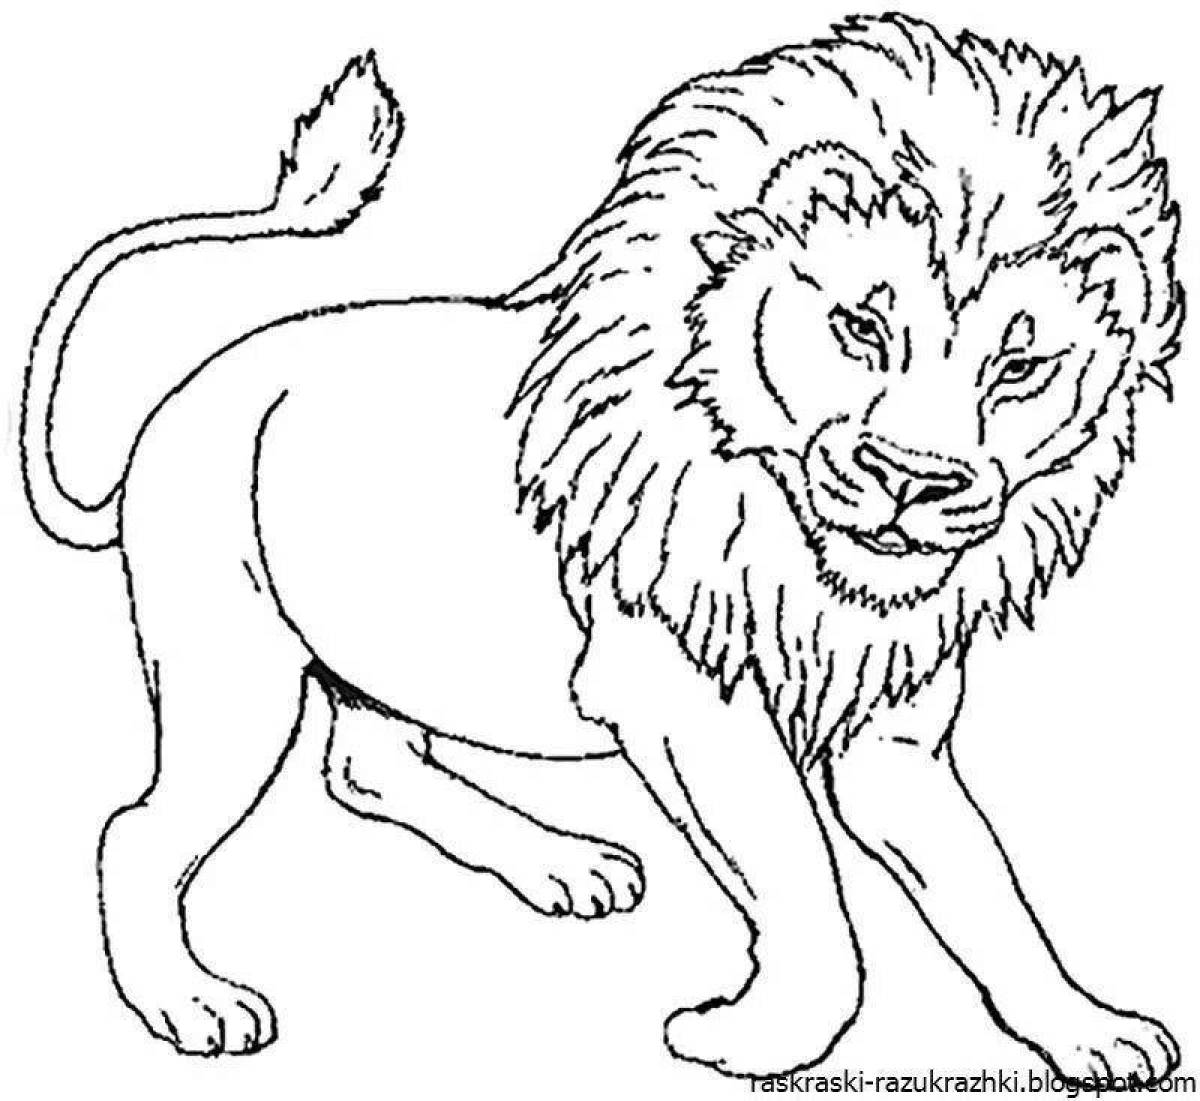 Coloring book brave lion